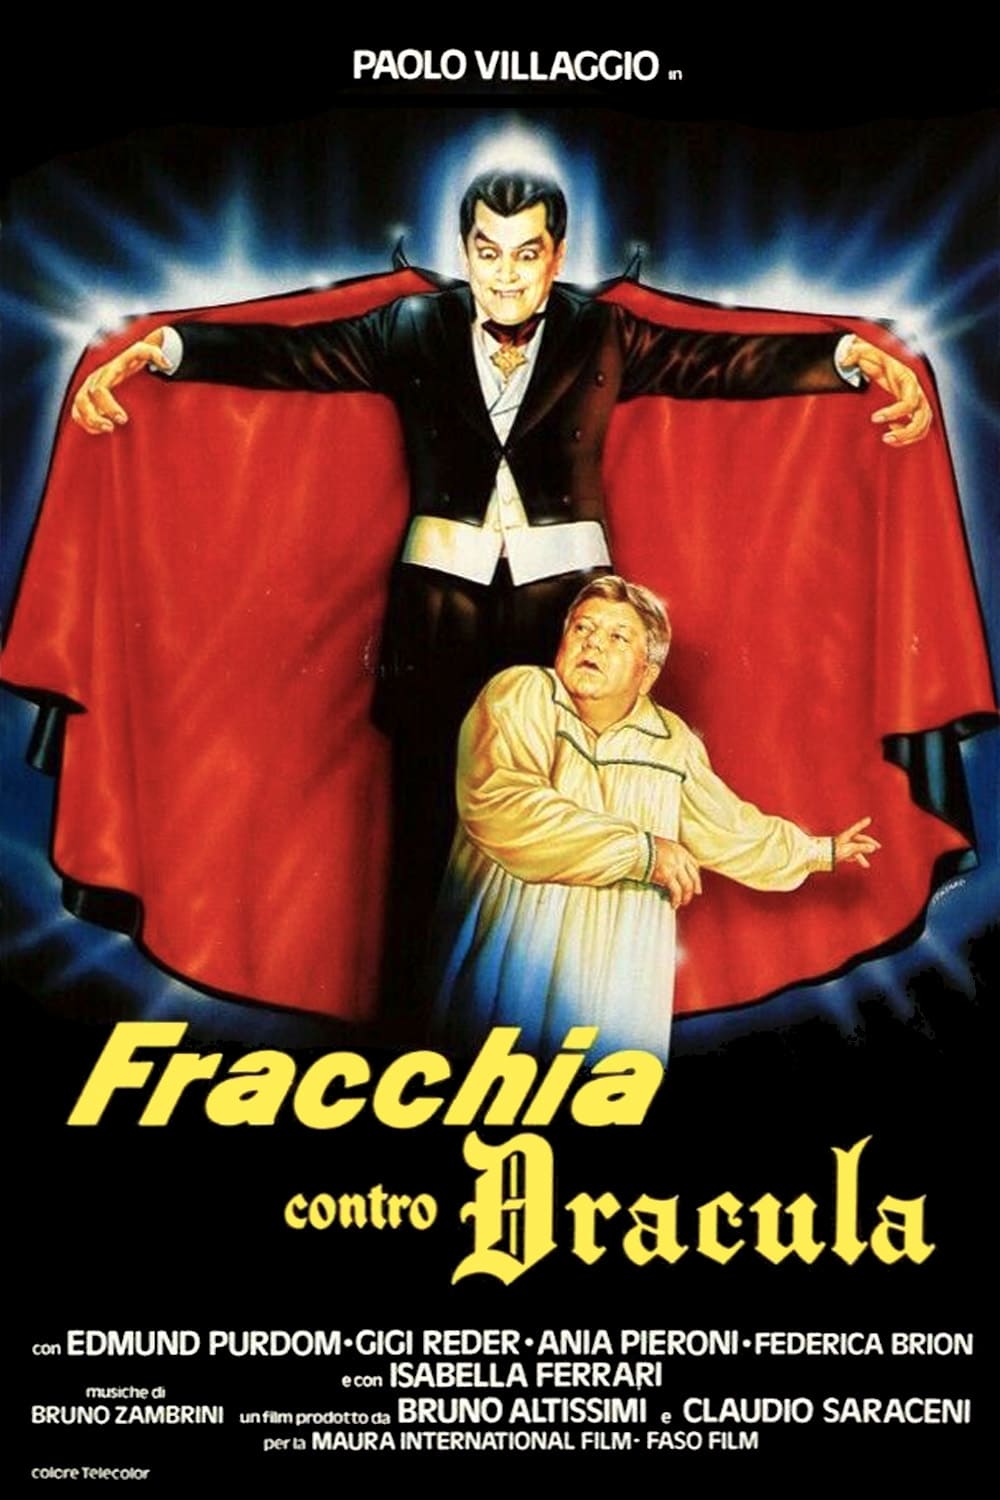 Who Is Afraid Of Dracula? (1985)